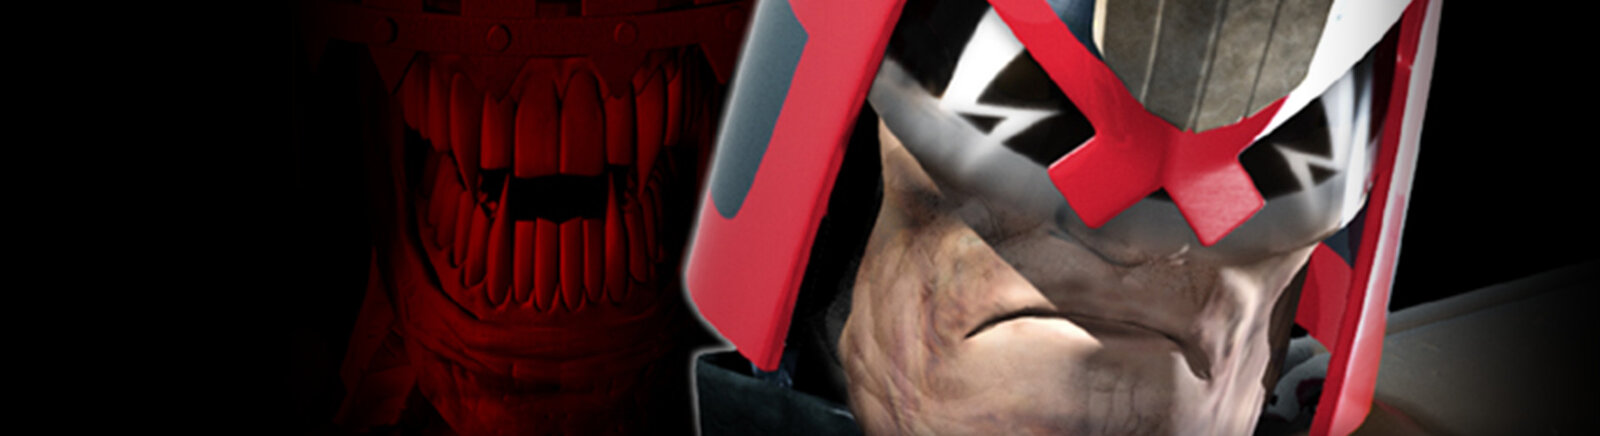 Дата выхода Judge Dredd: Dredd vs Death  на PC, PS2 и Xbox в России и во всем мире